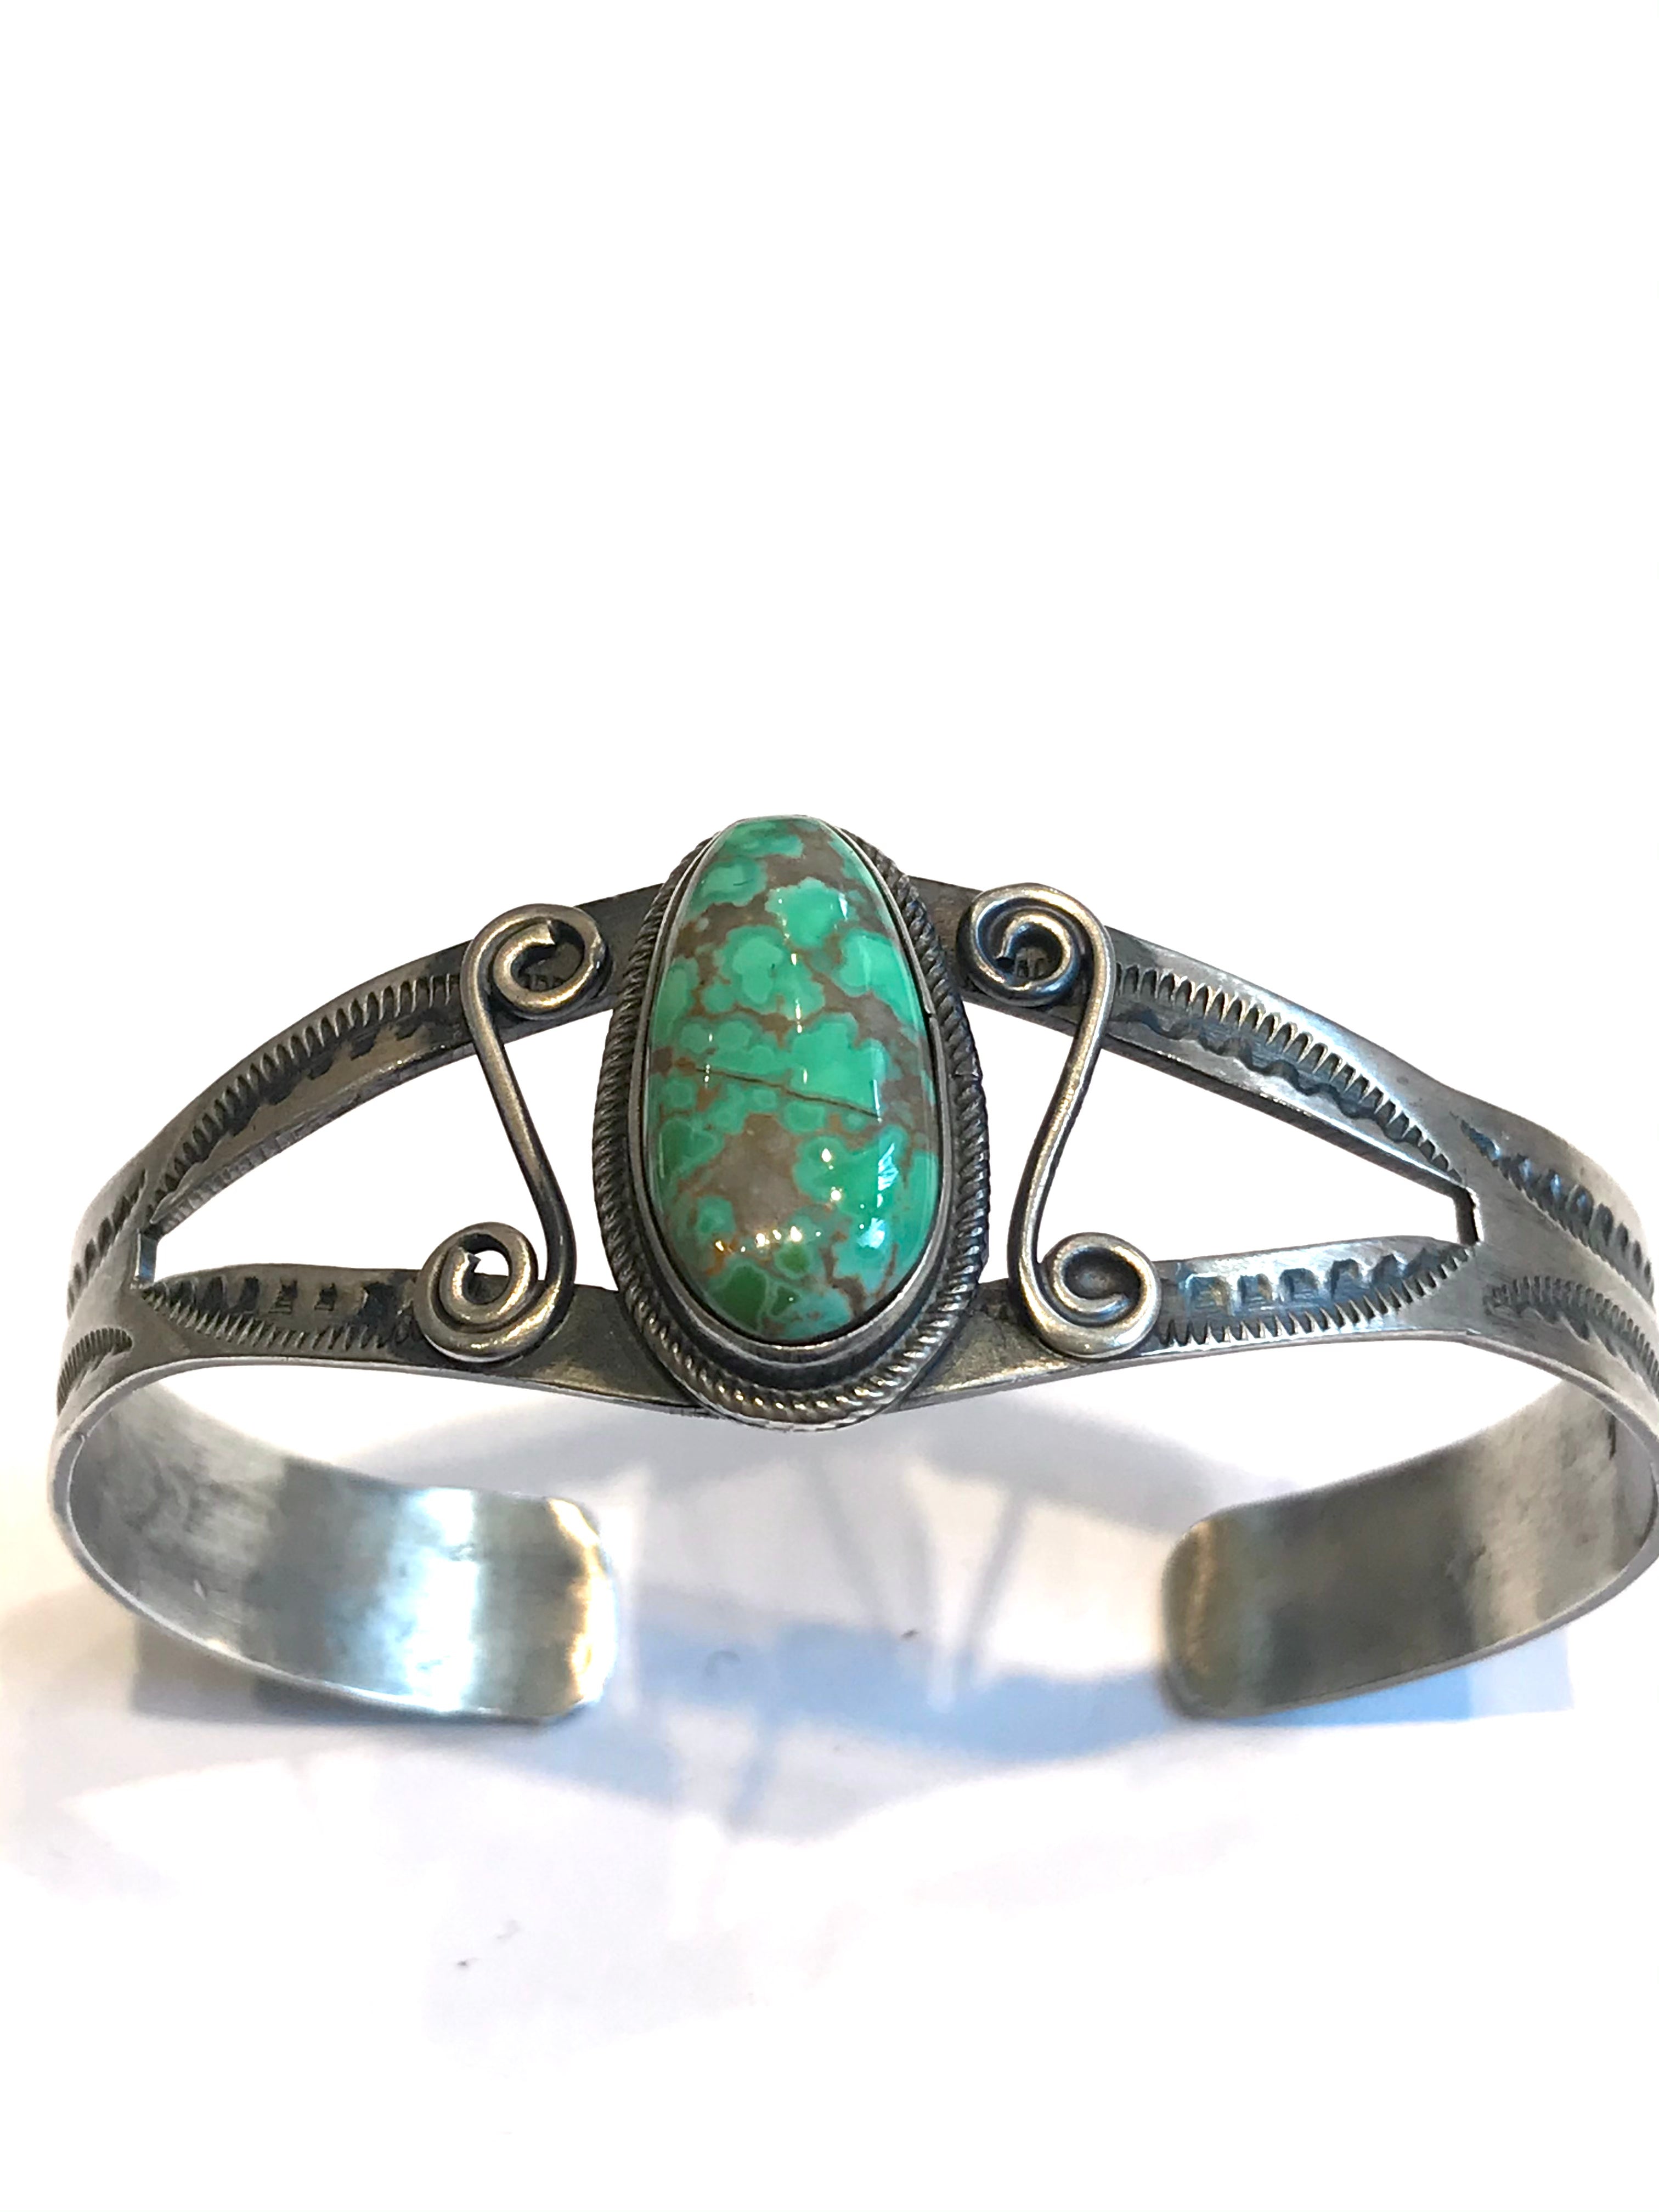 Rare emerald green bracelet